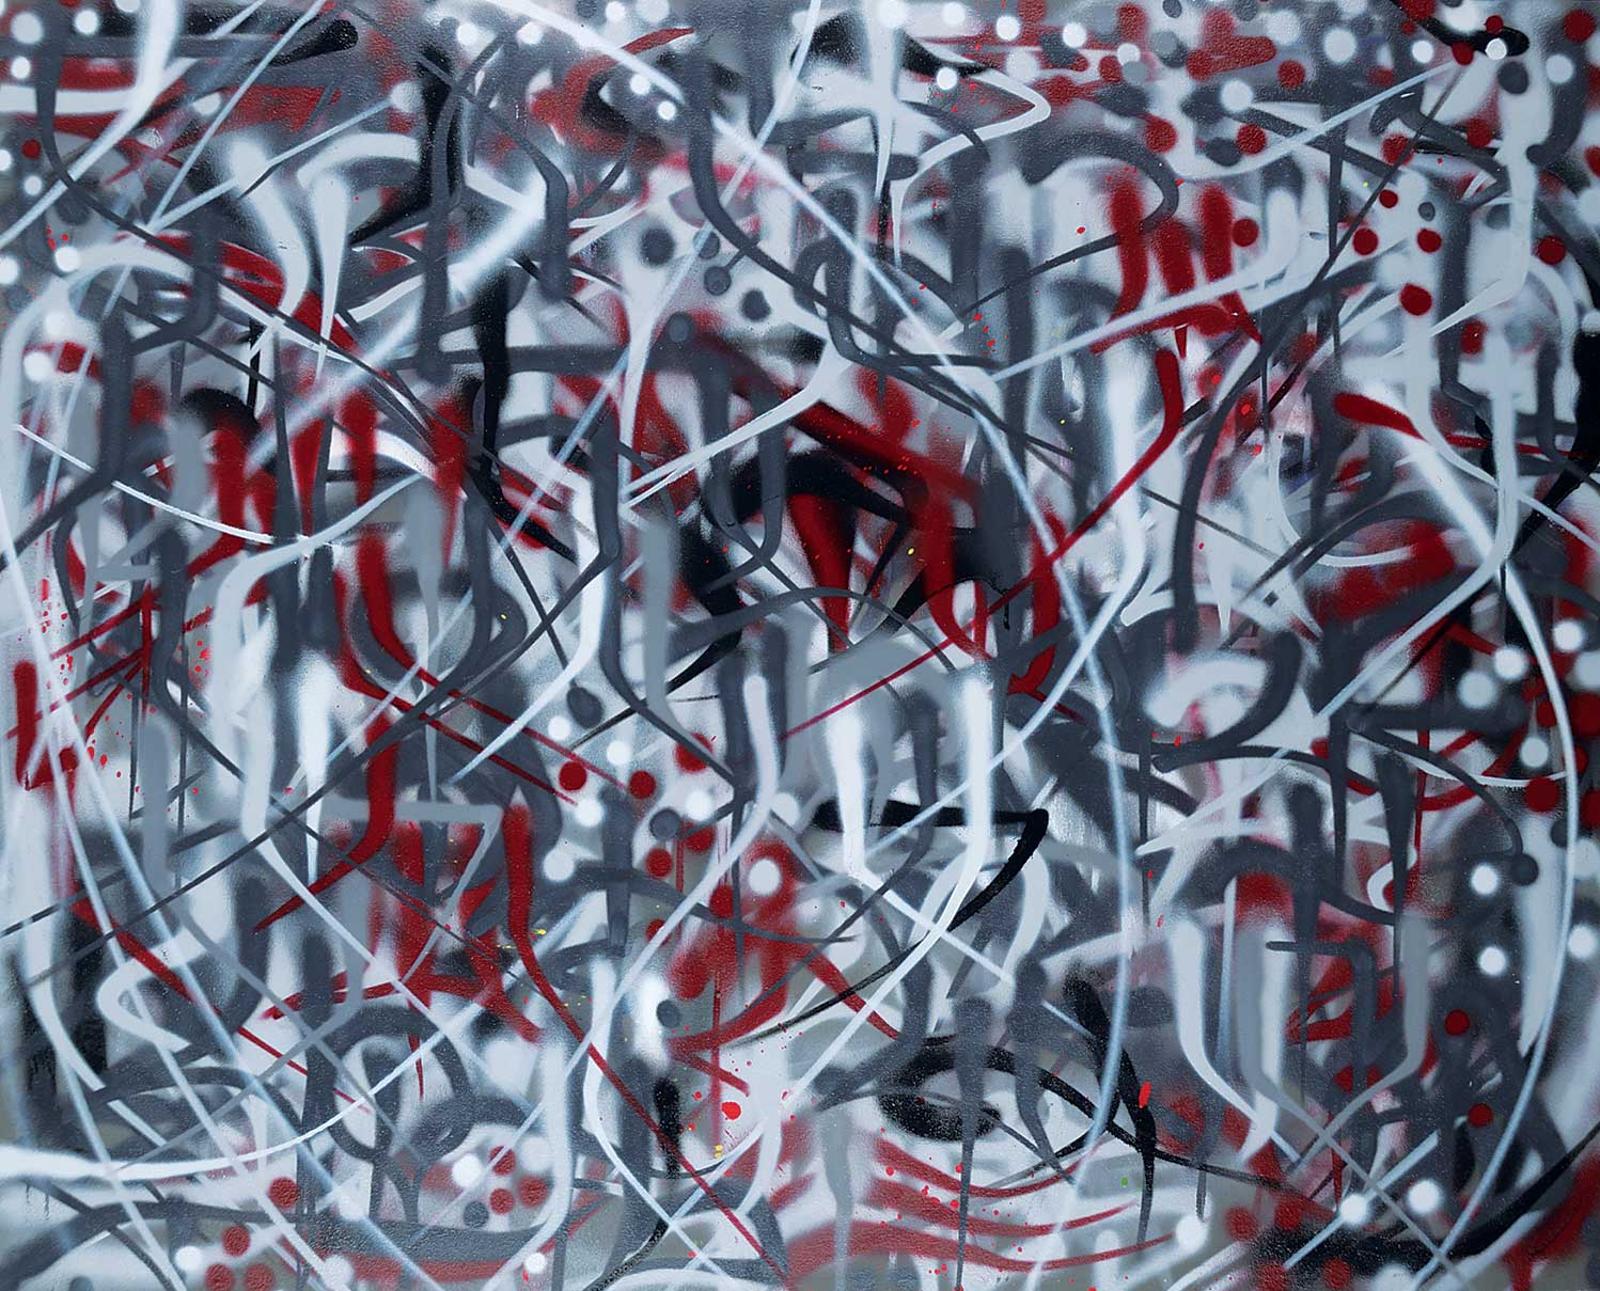 Brad Mulherin - Untitled - Red and Gray Graffiti